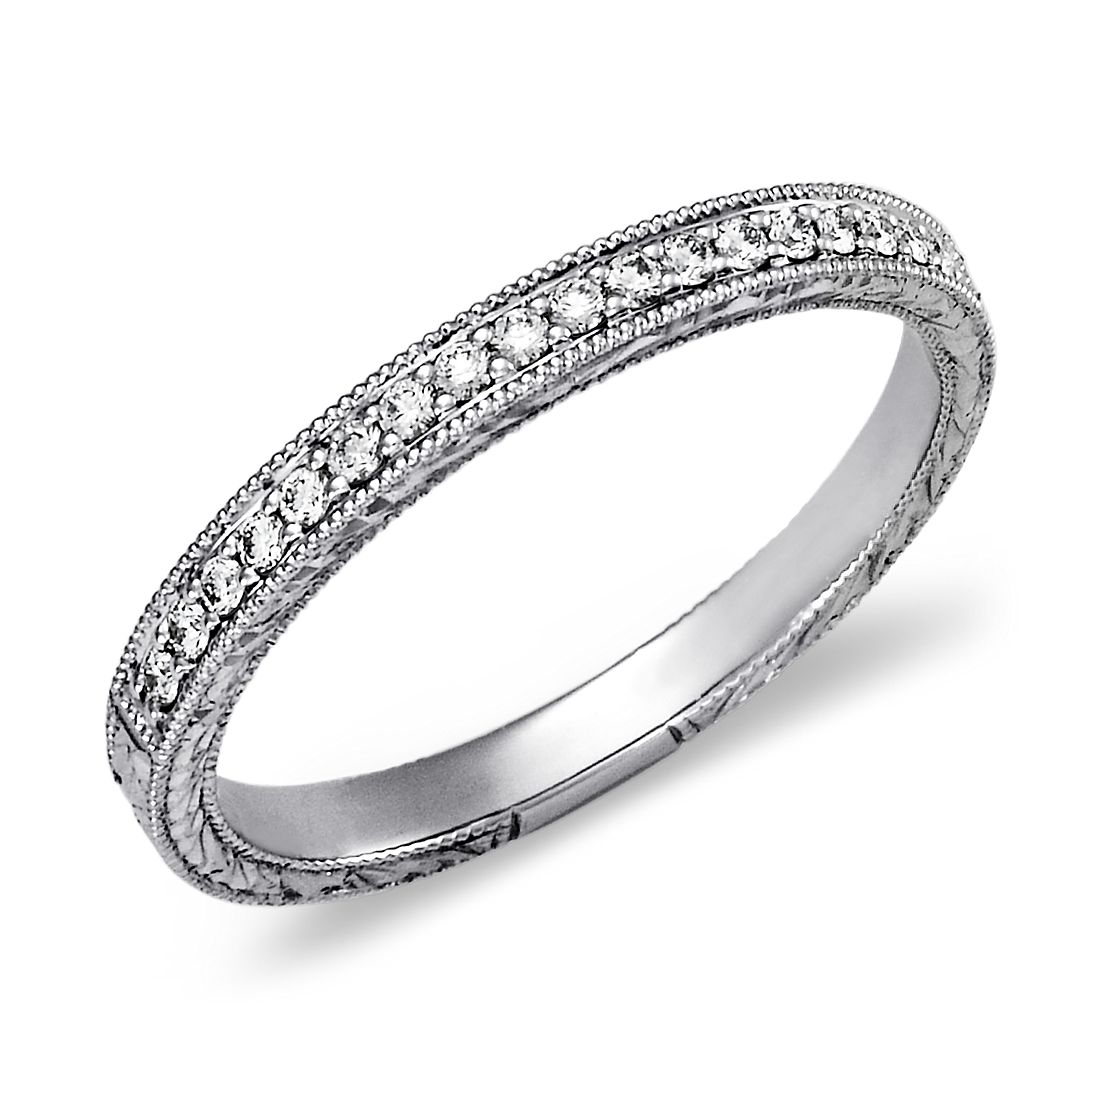 Engraved Micropavé Diamond Ring in Platinum